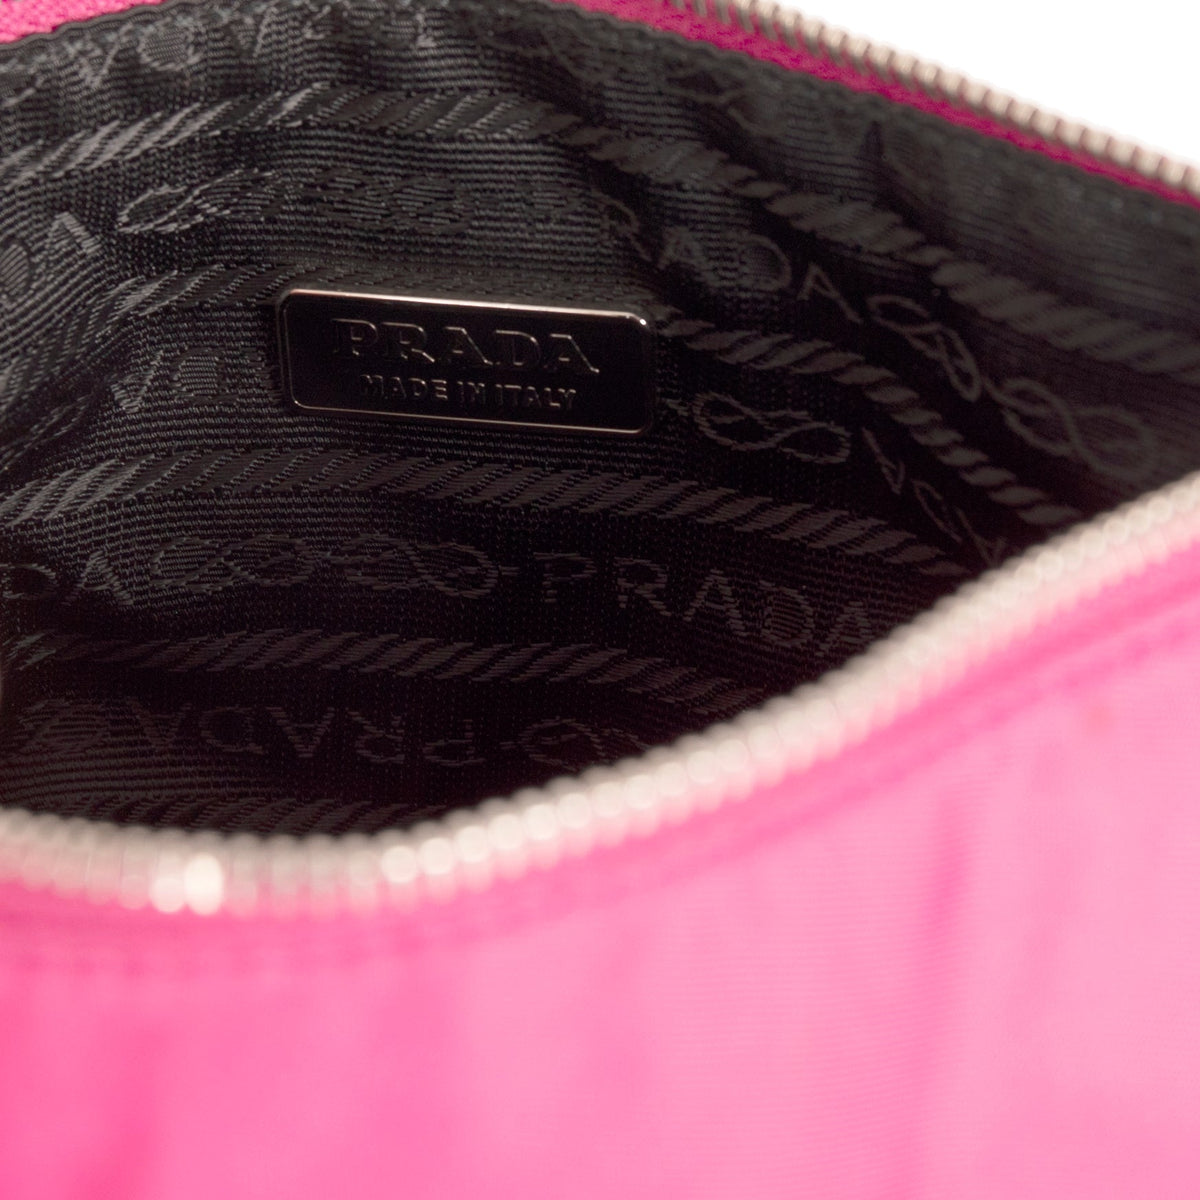 Prada Pink Nylon Pochette Bag